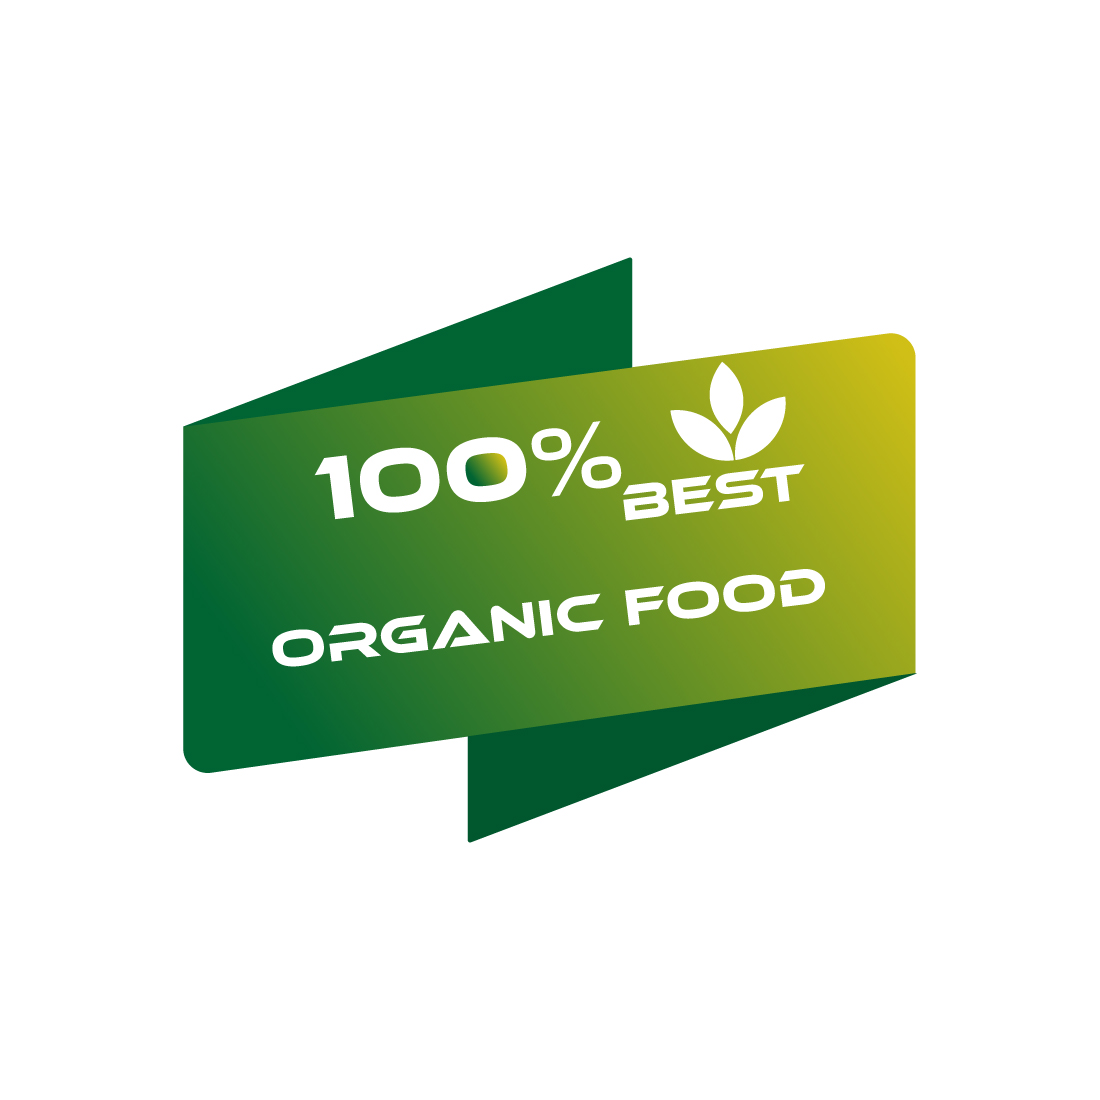 professional Organic food logo design vector images Natural Food logo design, Halal food logo design Green leaf logo icon design Vigan food logo cover image.